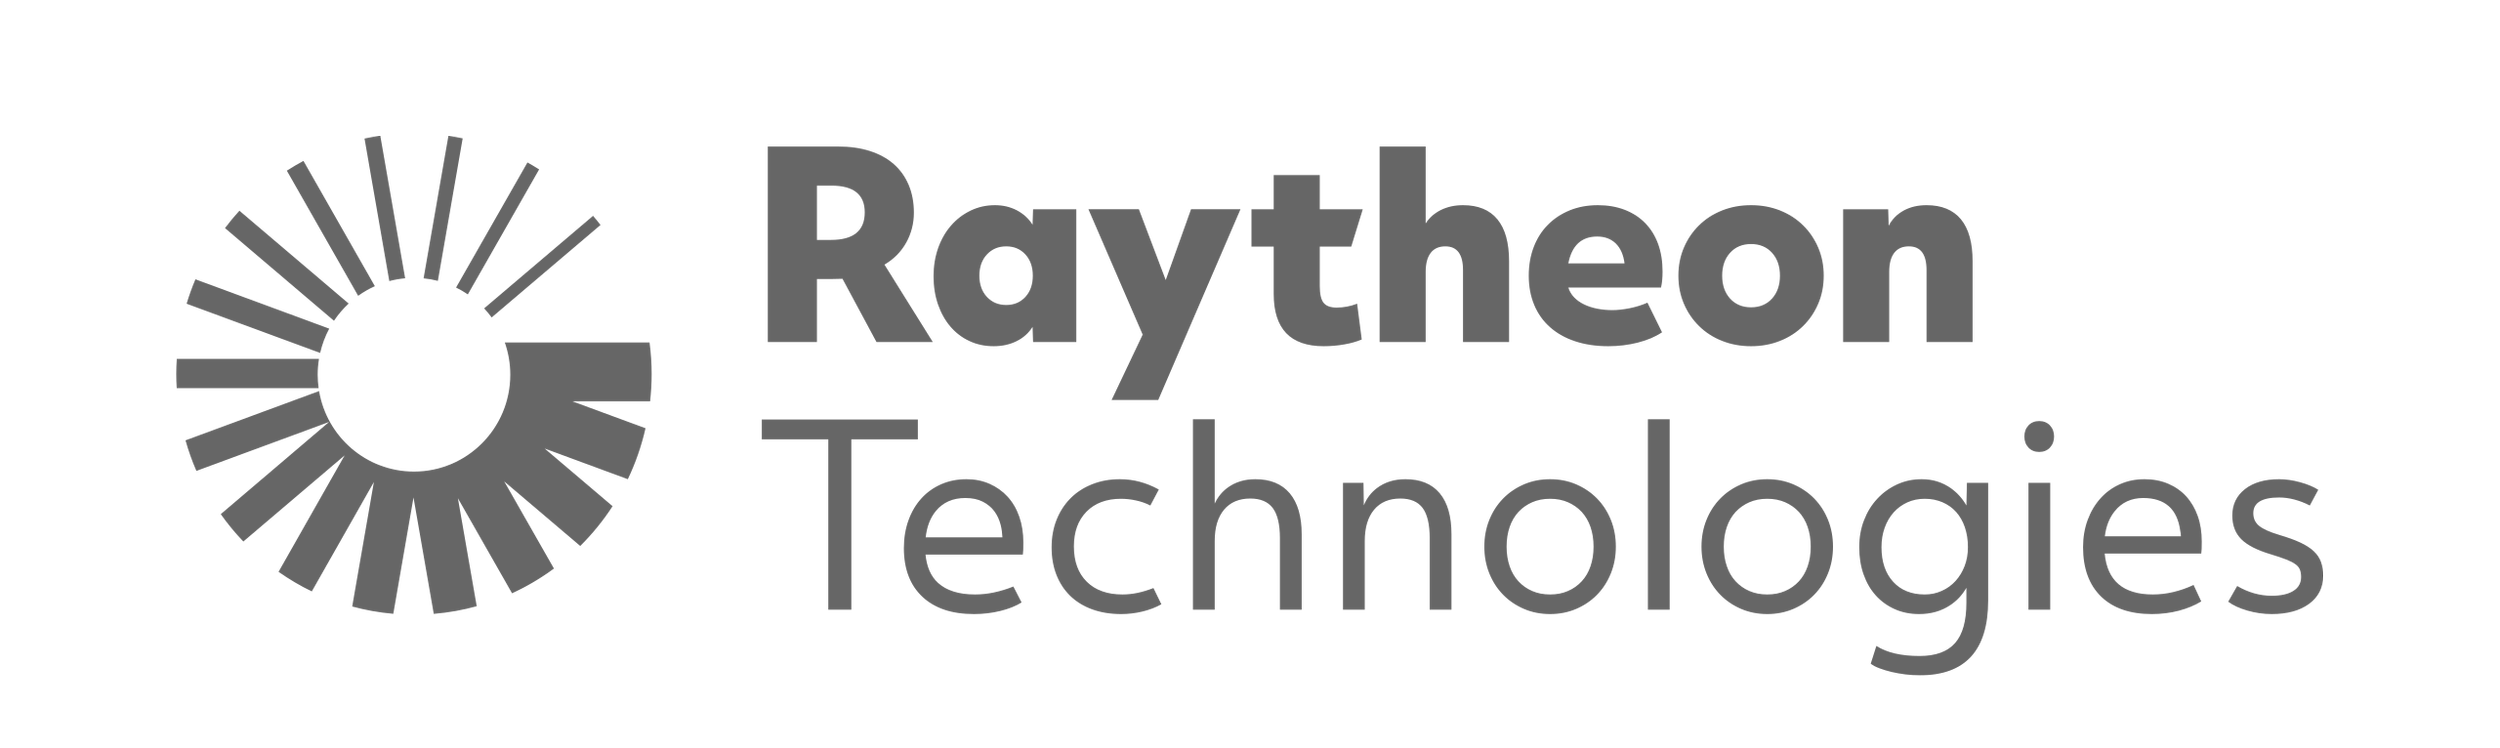 Raytheon_Technologies_logo.png